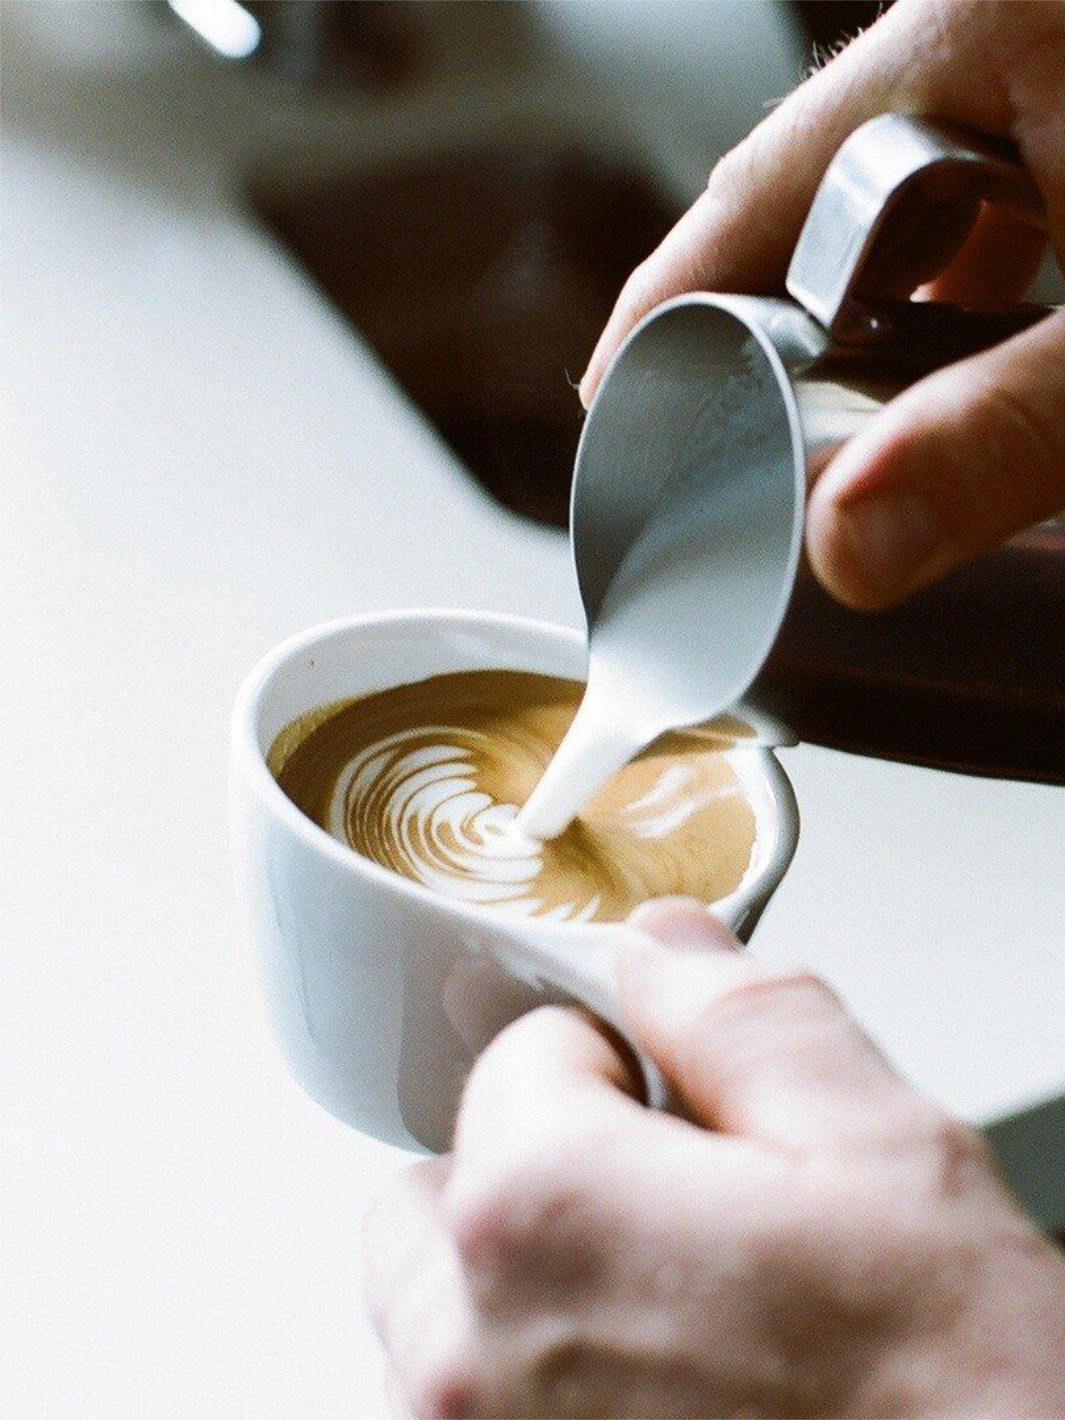 notNeutral LINO Single Cappuccino Cup & Saucer (5oz/148ml) – Someware